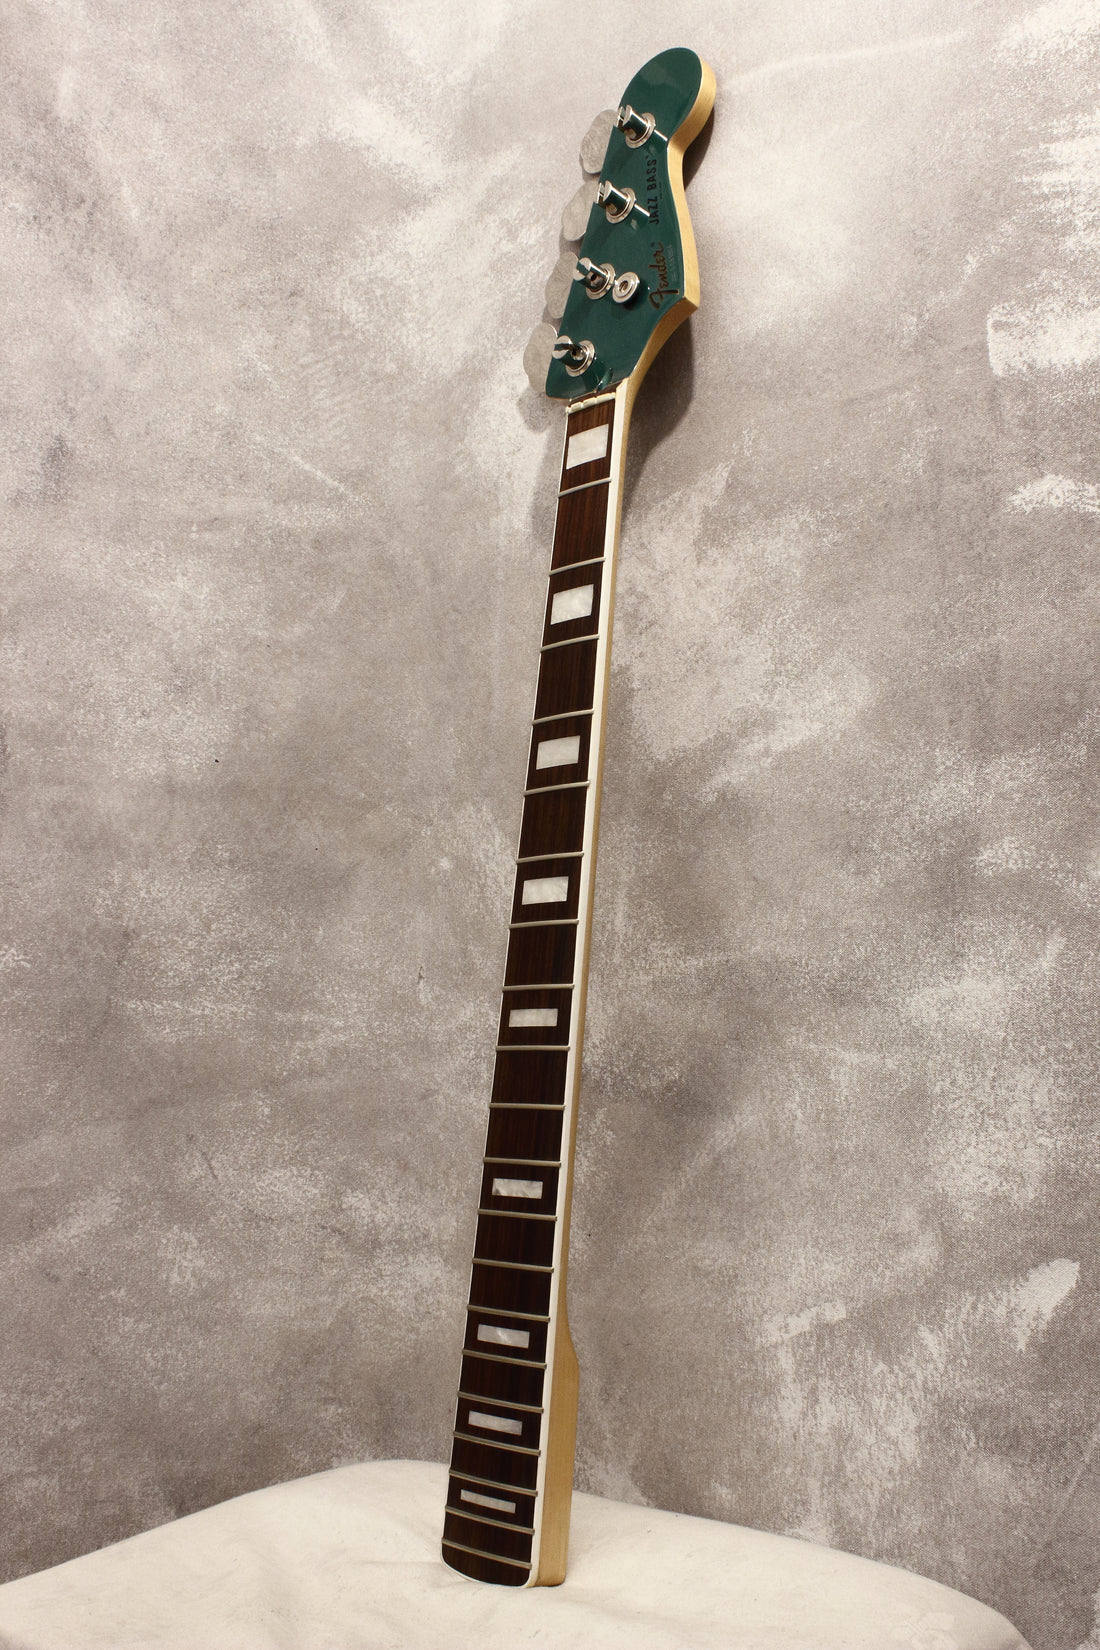 ** PROJECT ** Fender Japan JB75-90US Ocean Turquoise Metallic 2007